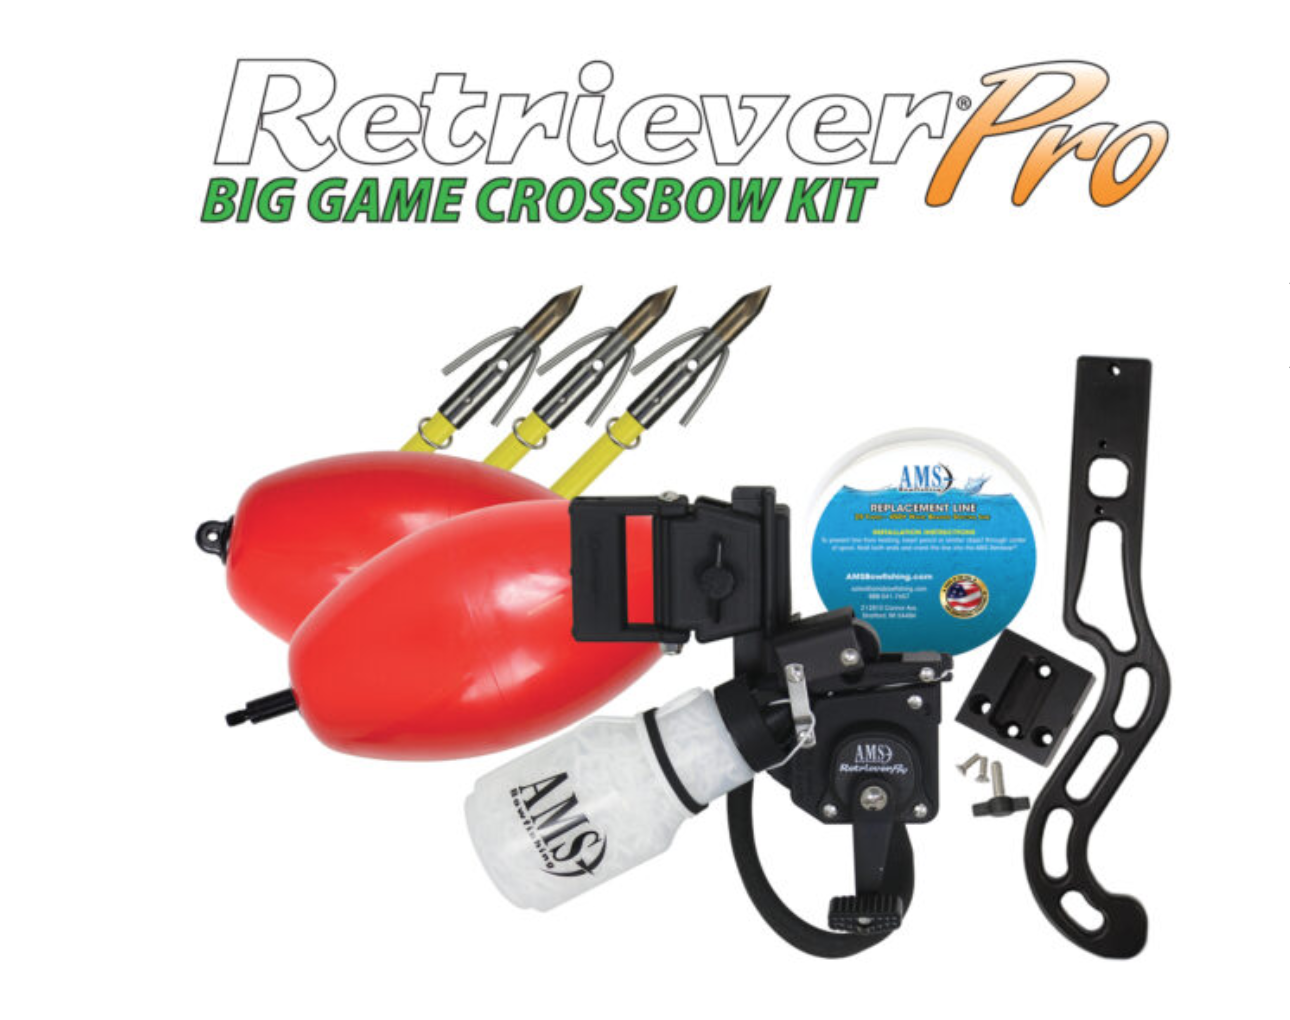 Big Game Crossbow Kit